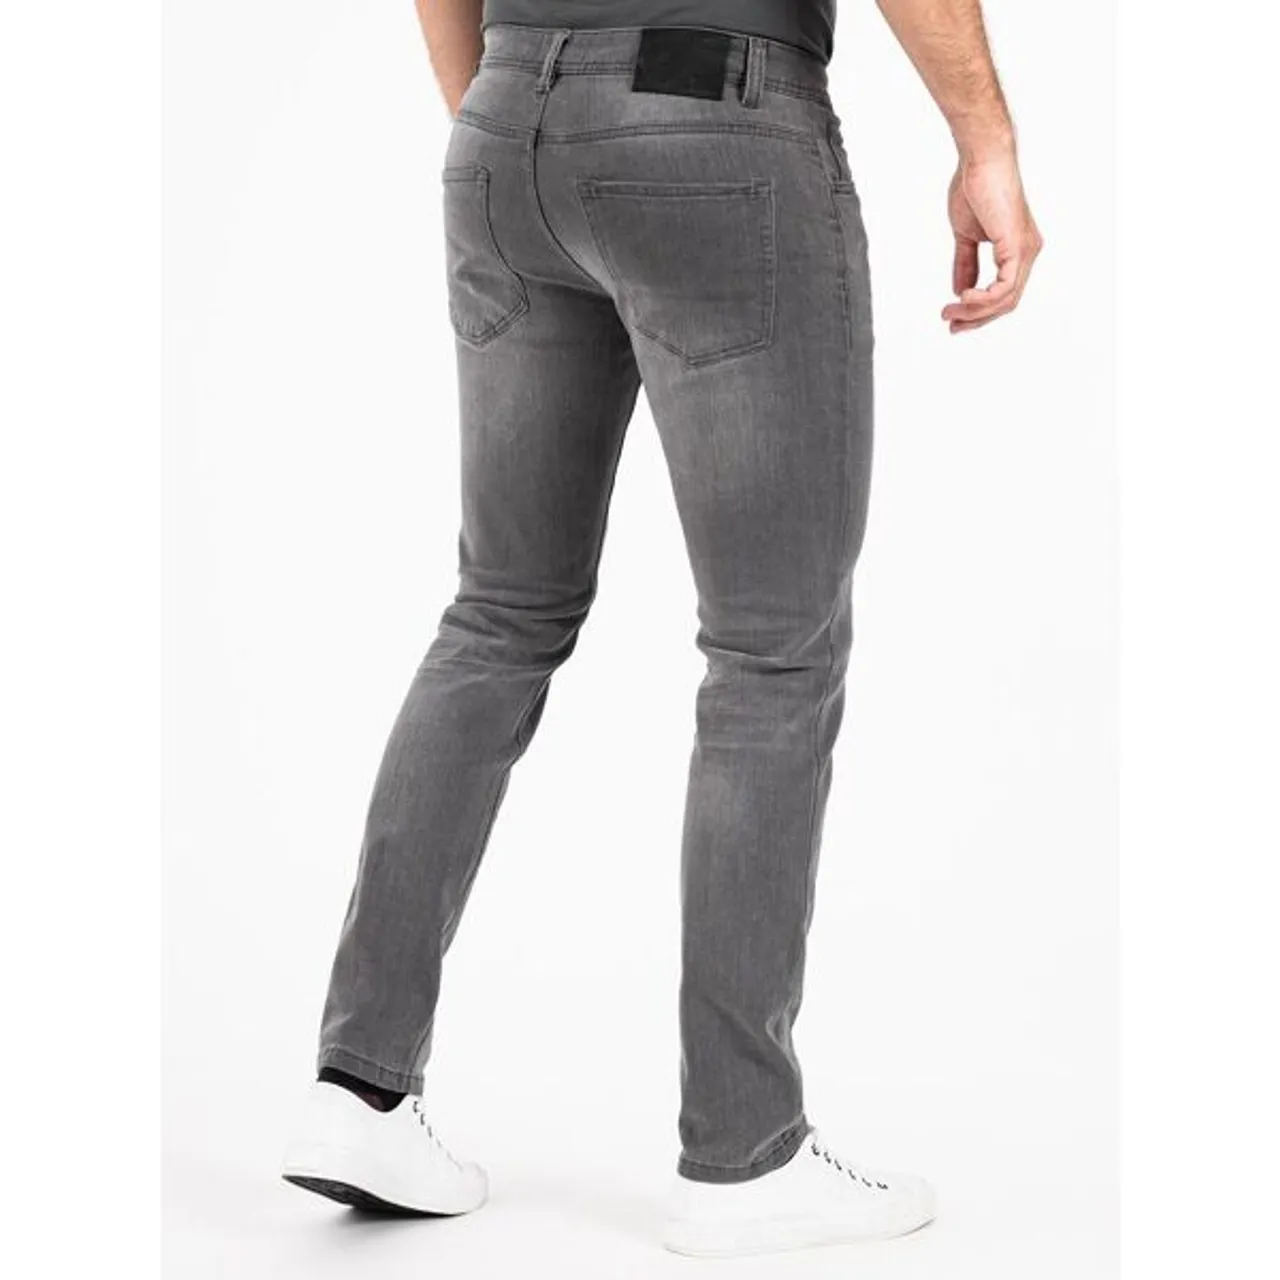 Slim-fit-Jeans PEAK TIME "Mailand" Gr. 38, Länge 32, grau (hellgrau) Herren Jeans 5-Pocket-Jeans